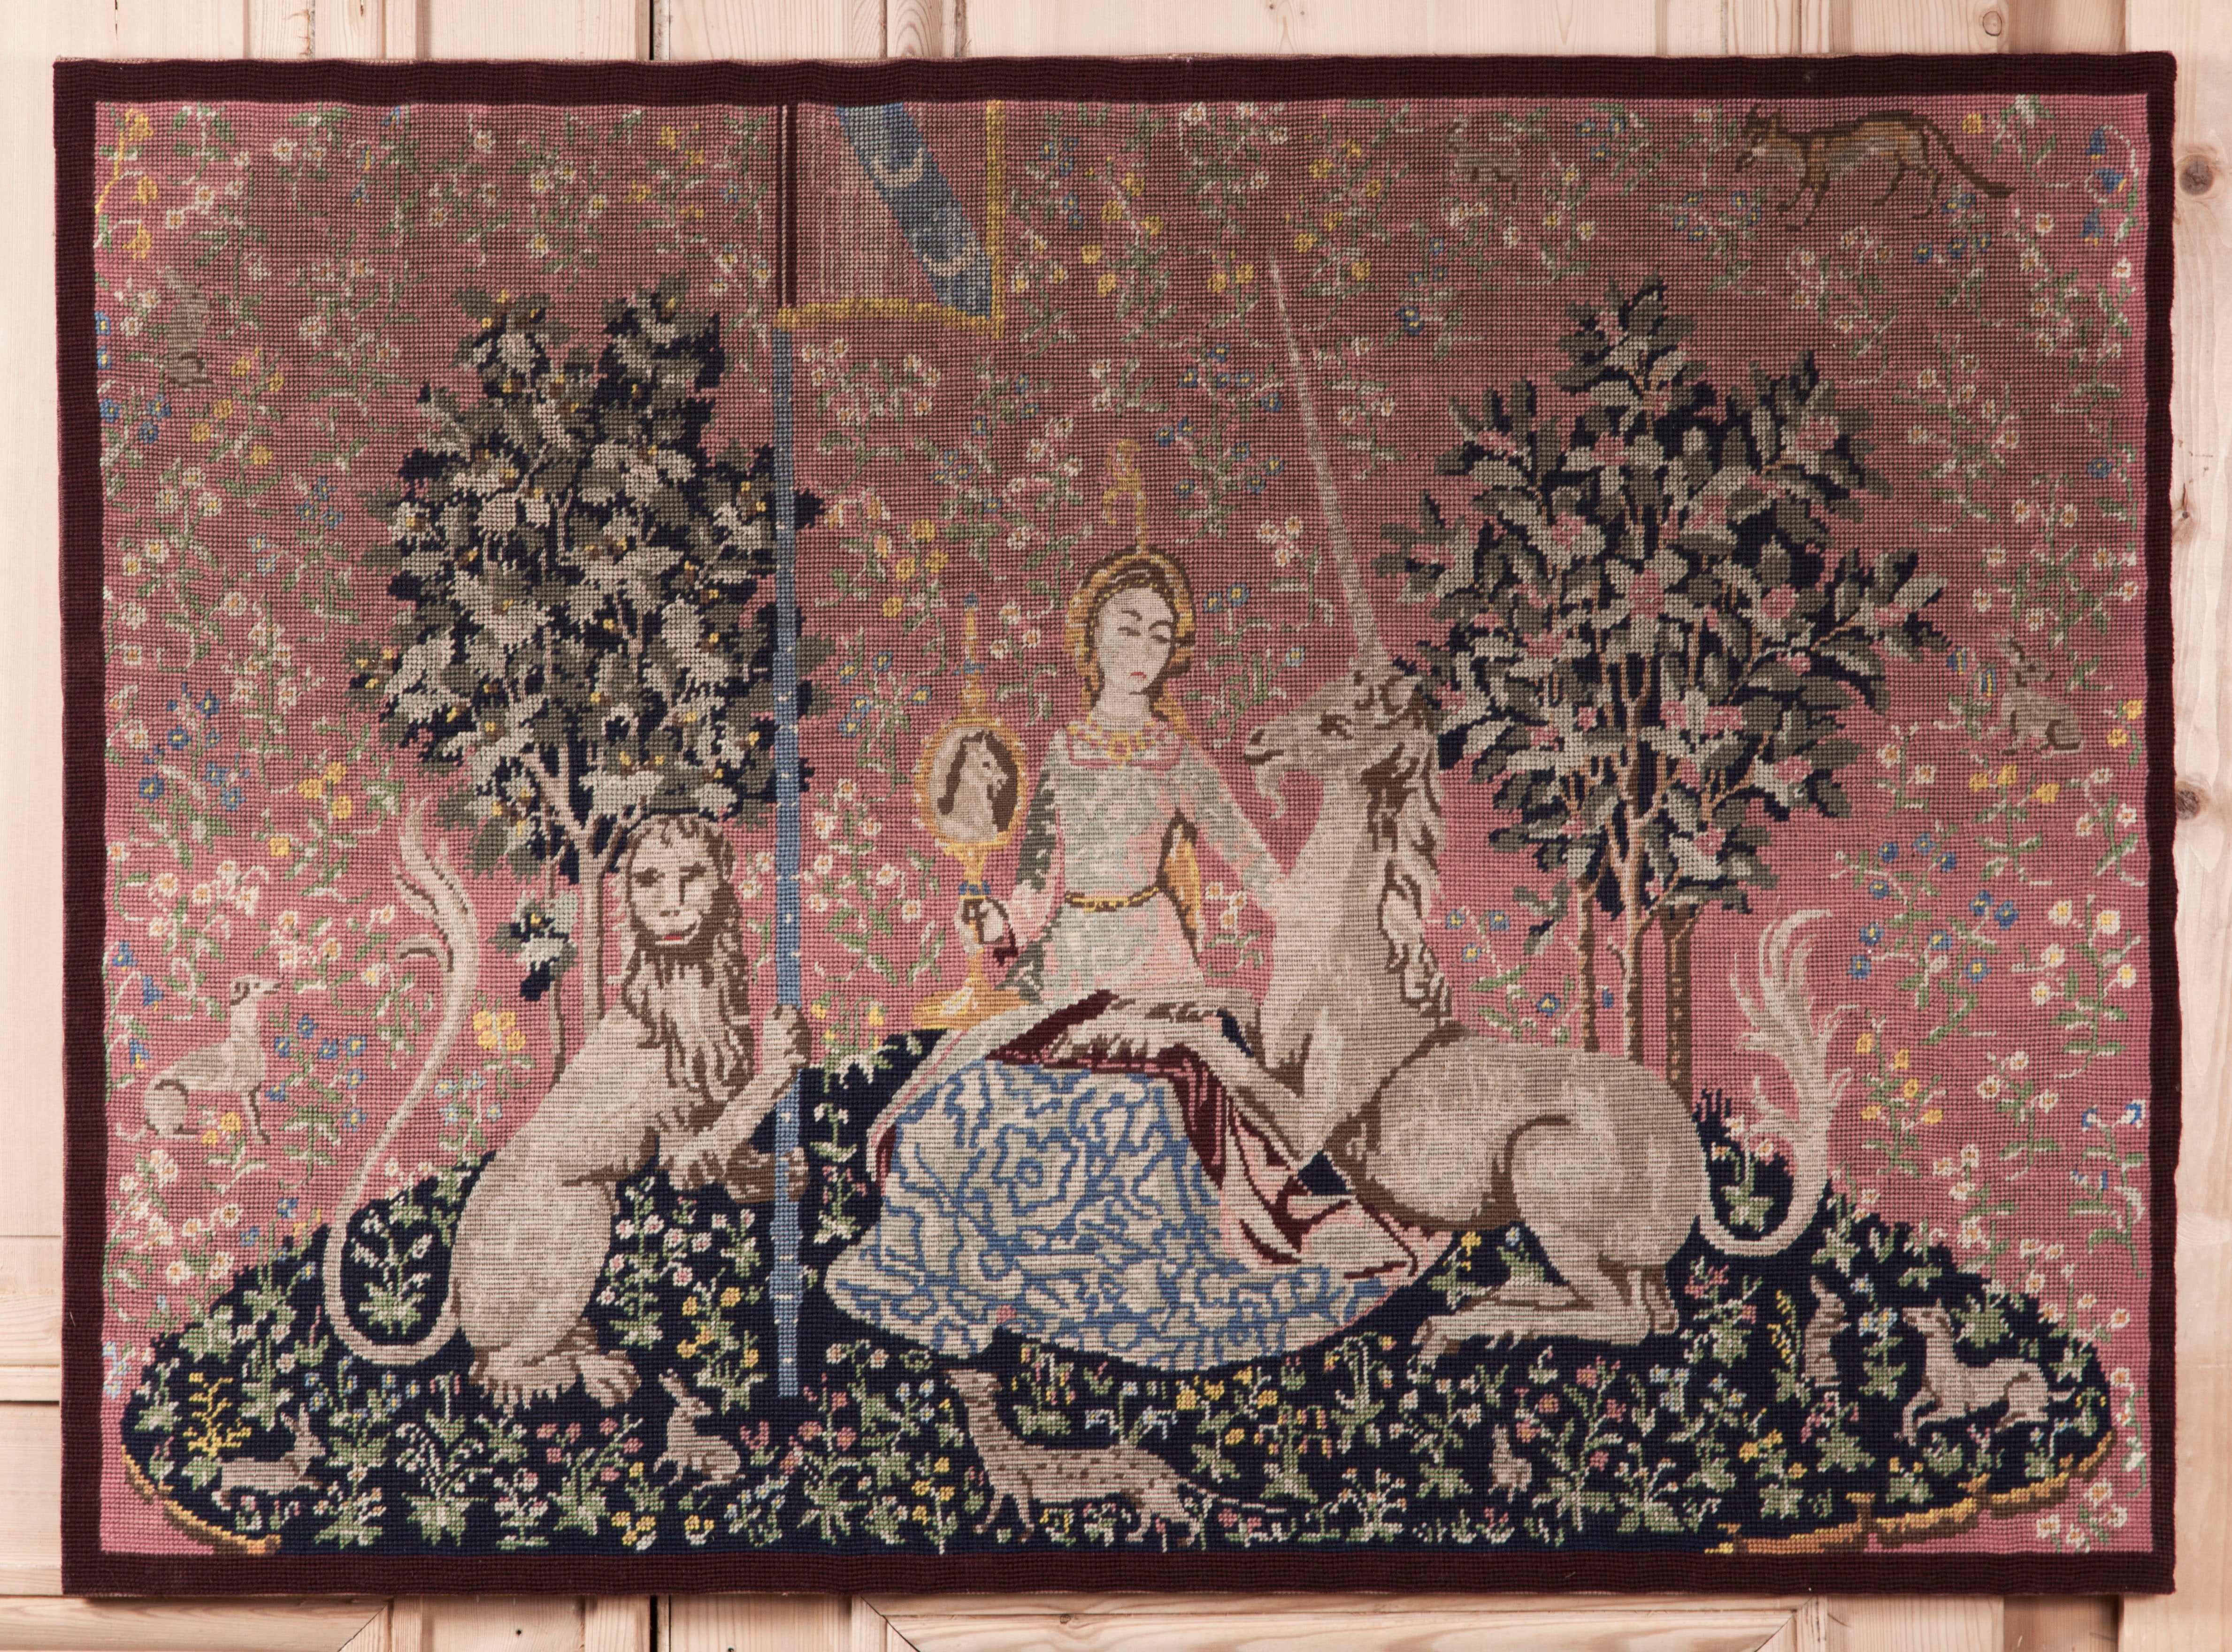 Antique Framed Needlepoint Tapestry